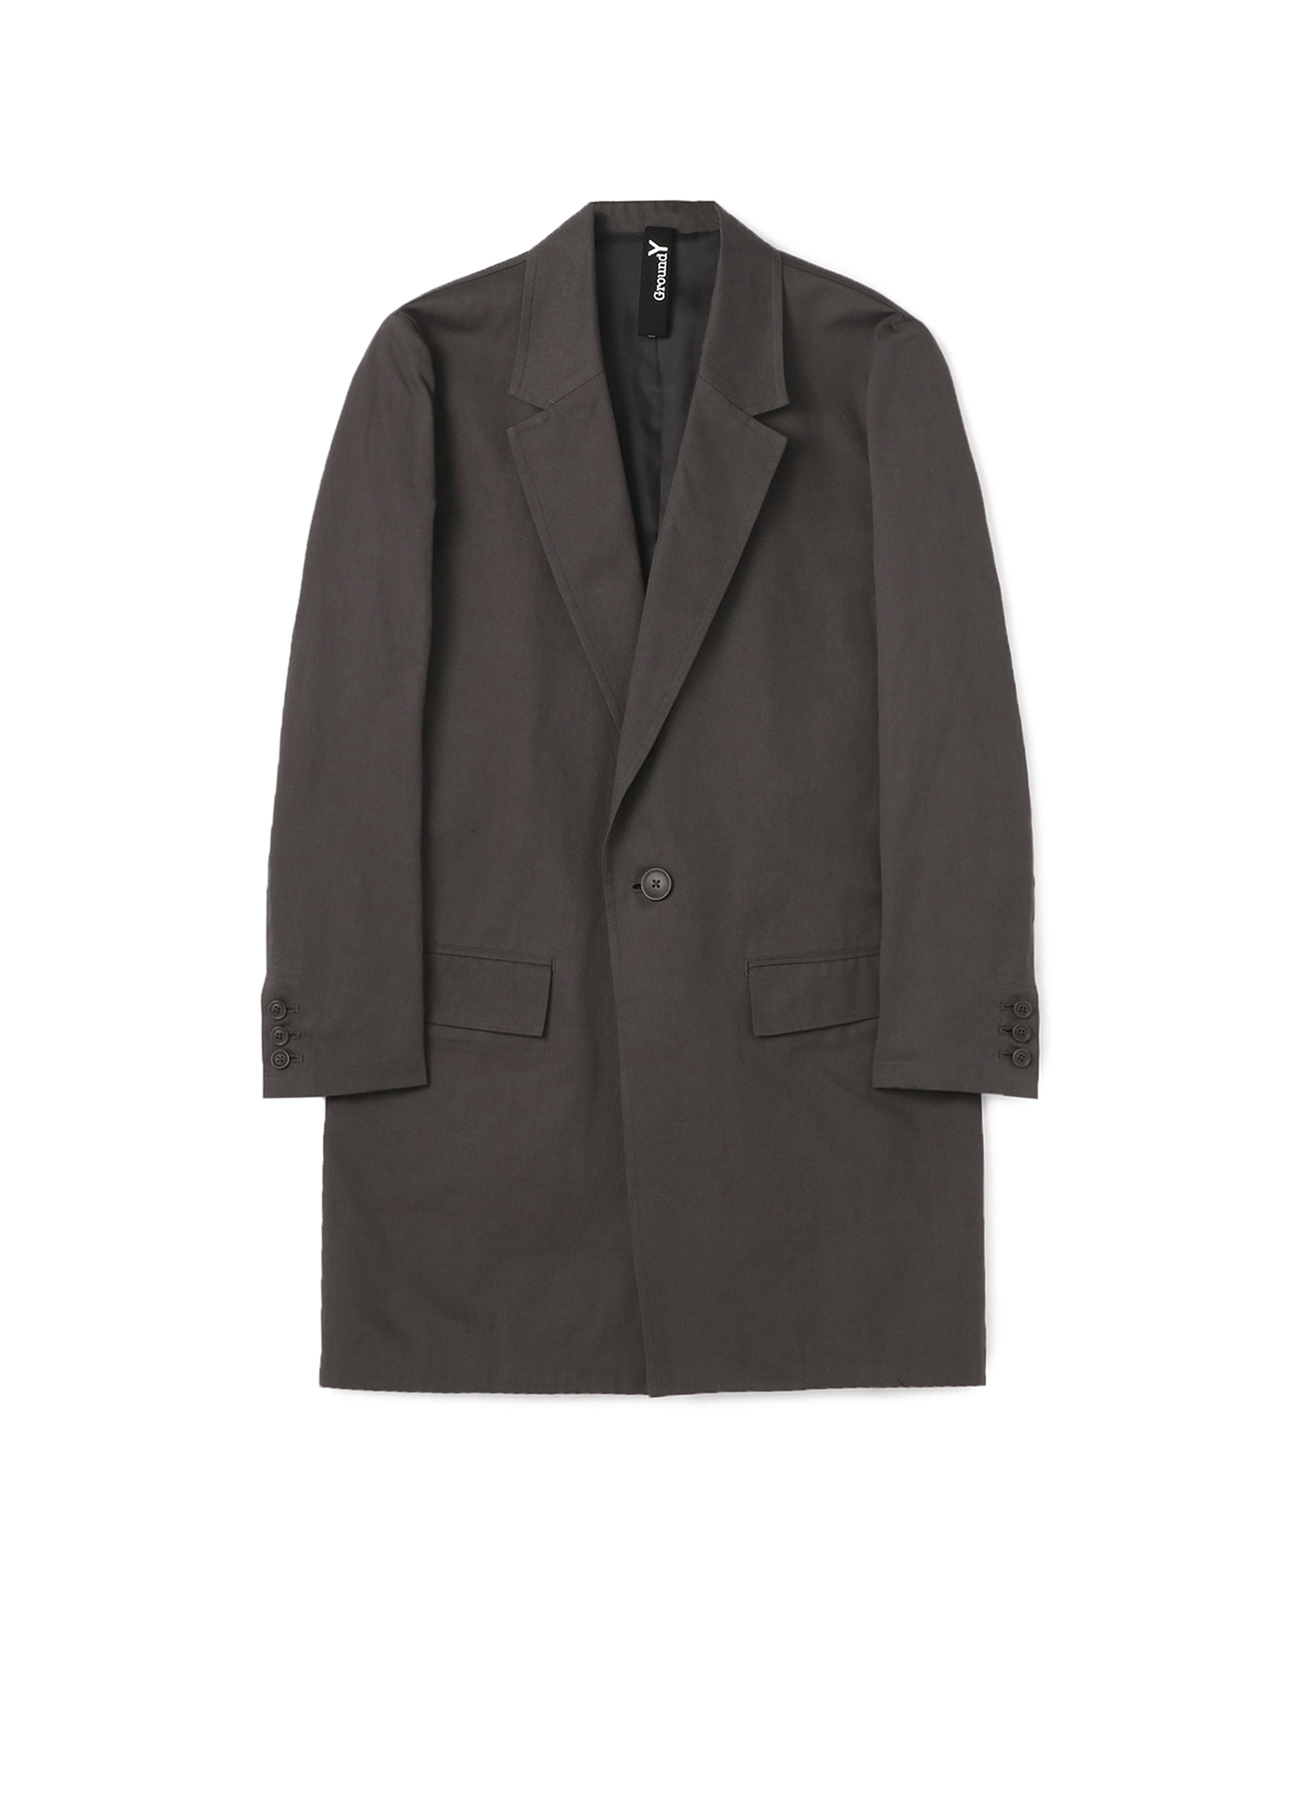 30/cotton twill 1B jacket